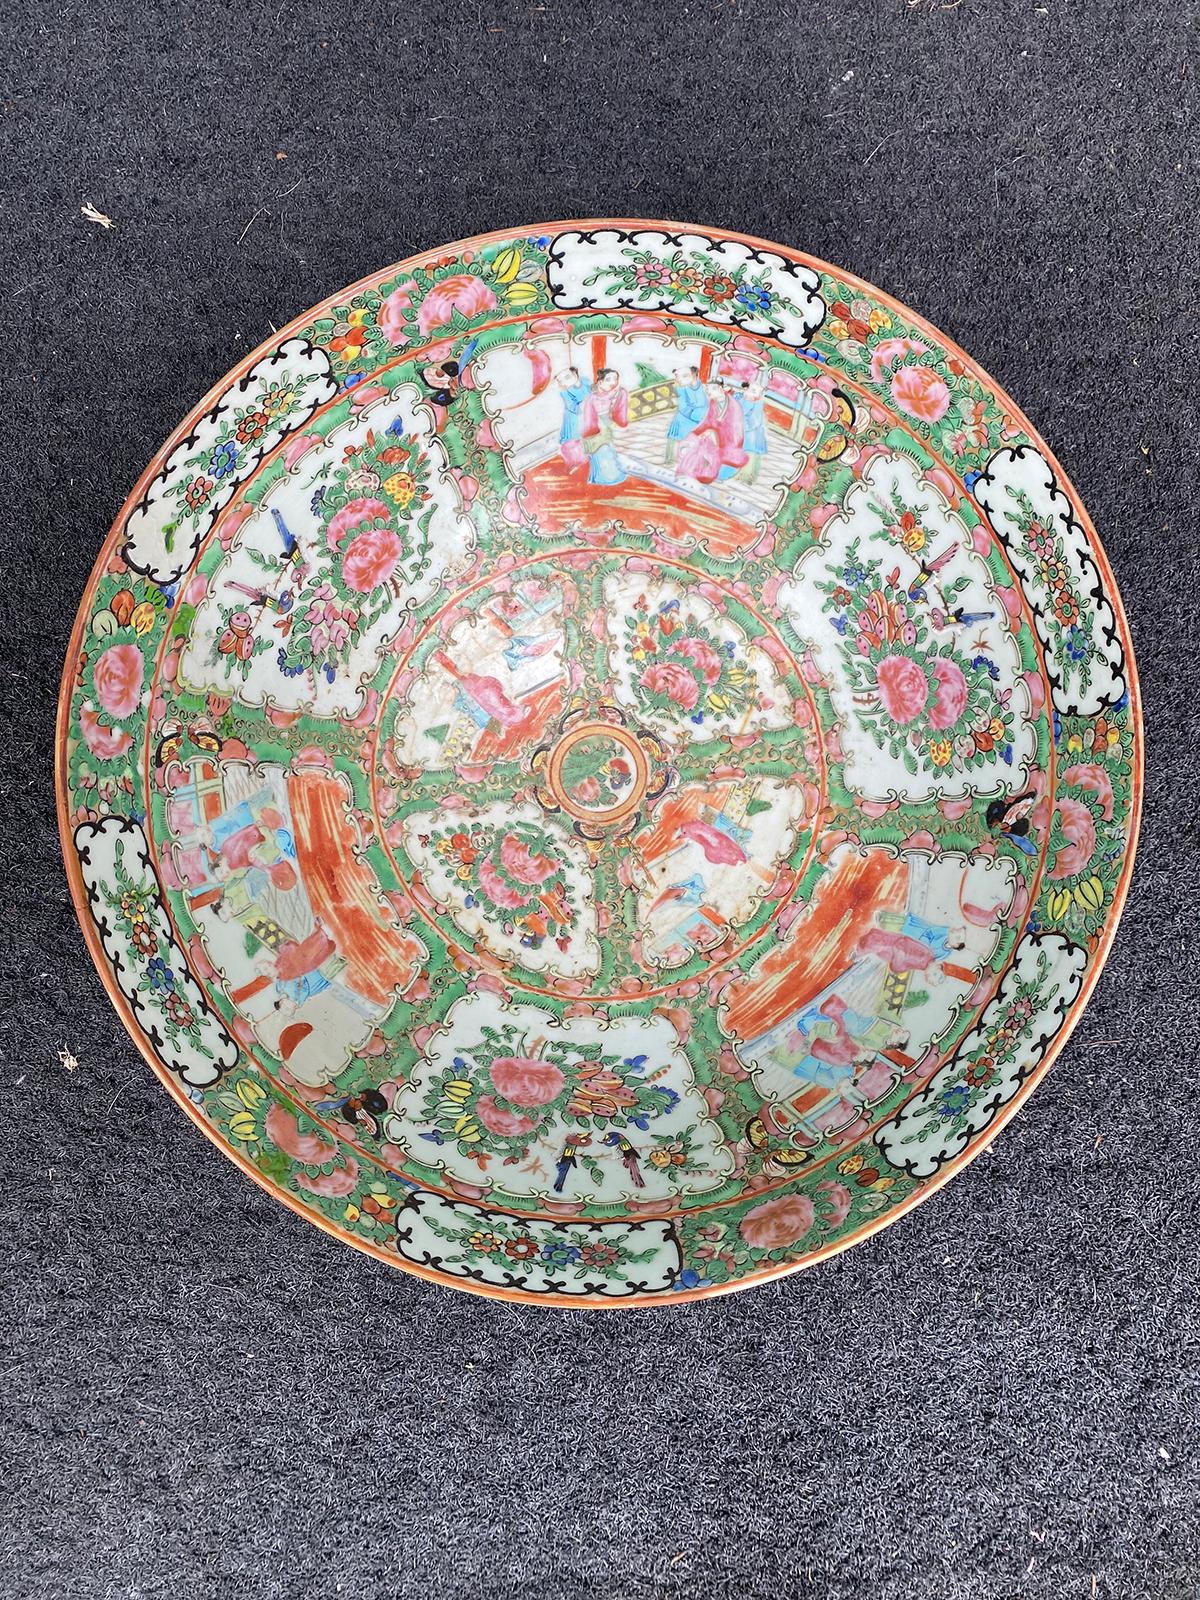 19th century rose medallion porcelain bowl, unmarked.